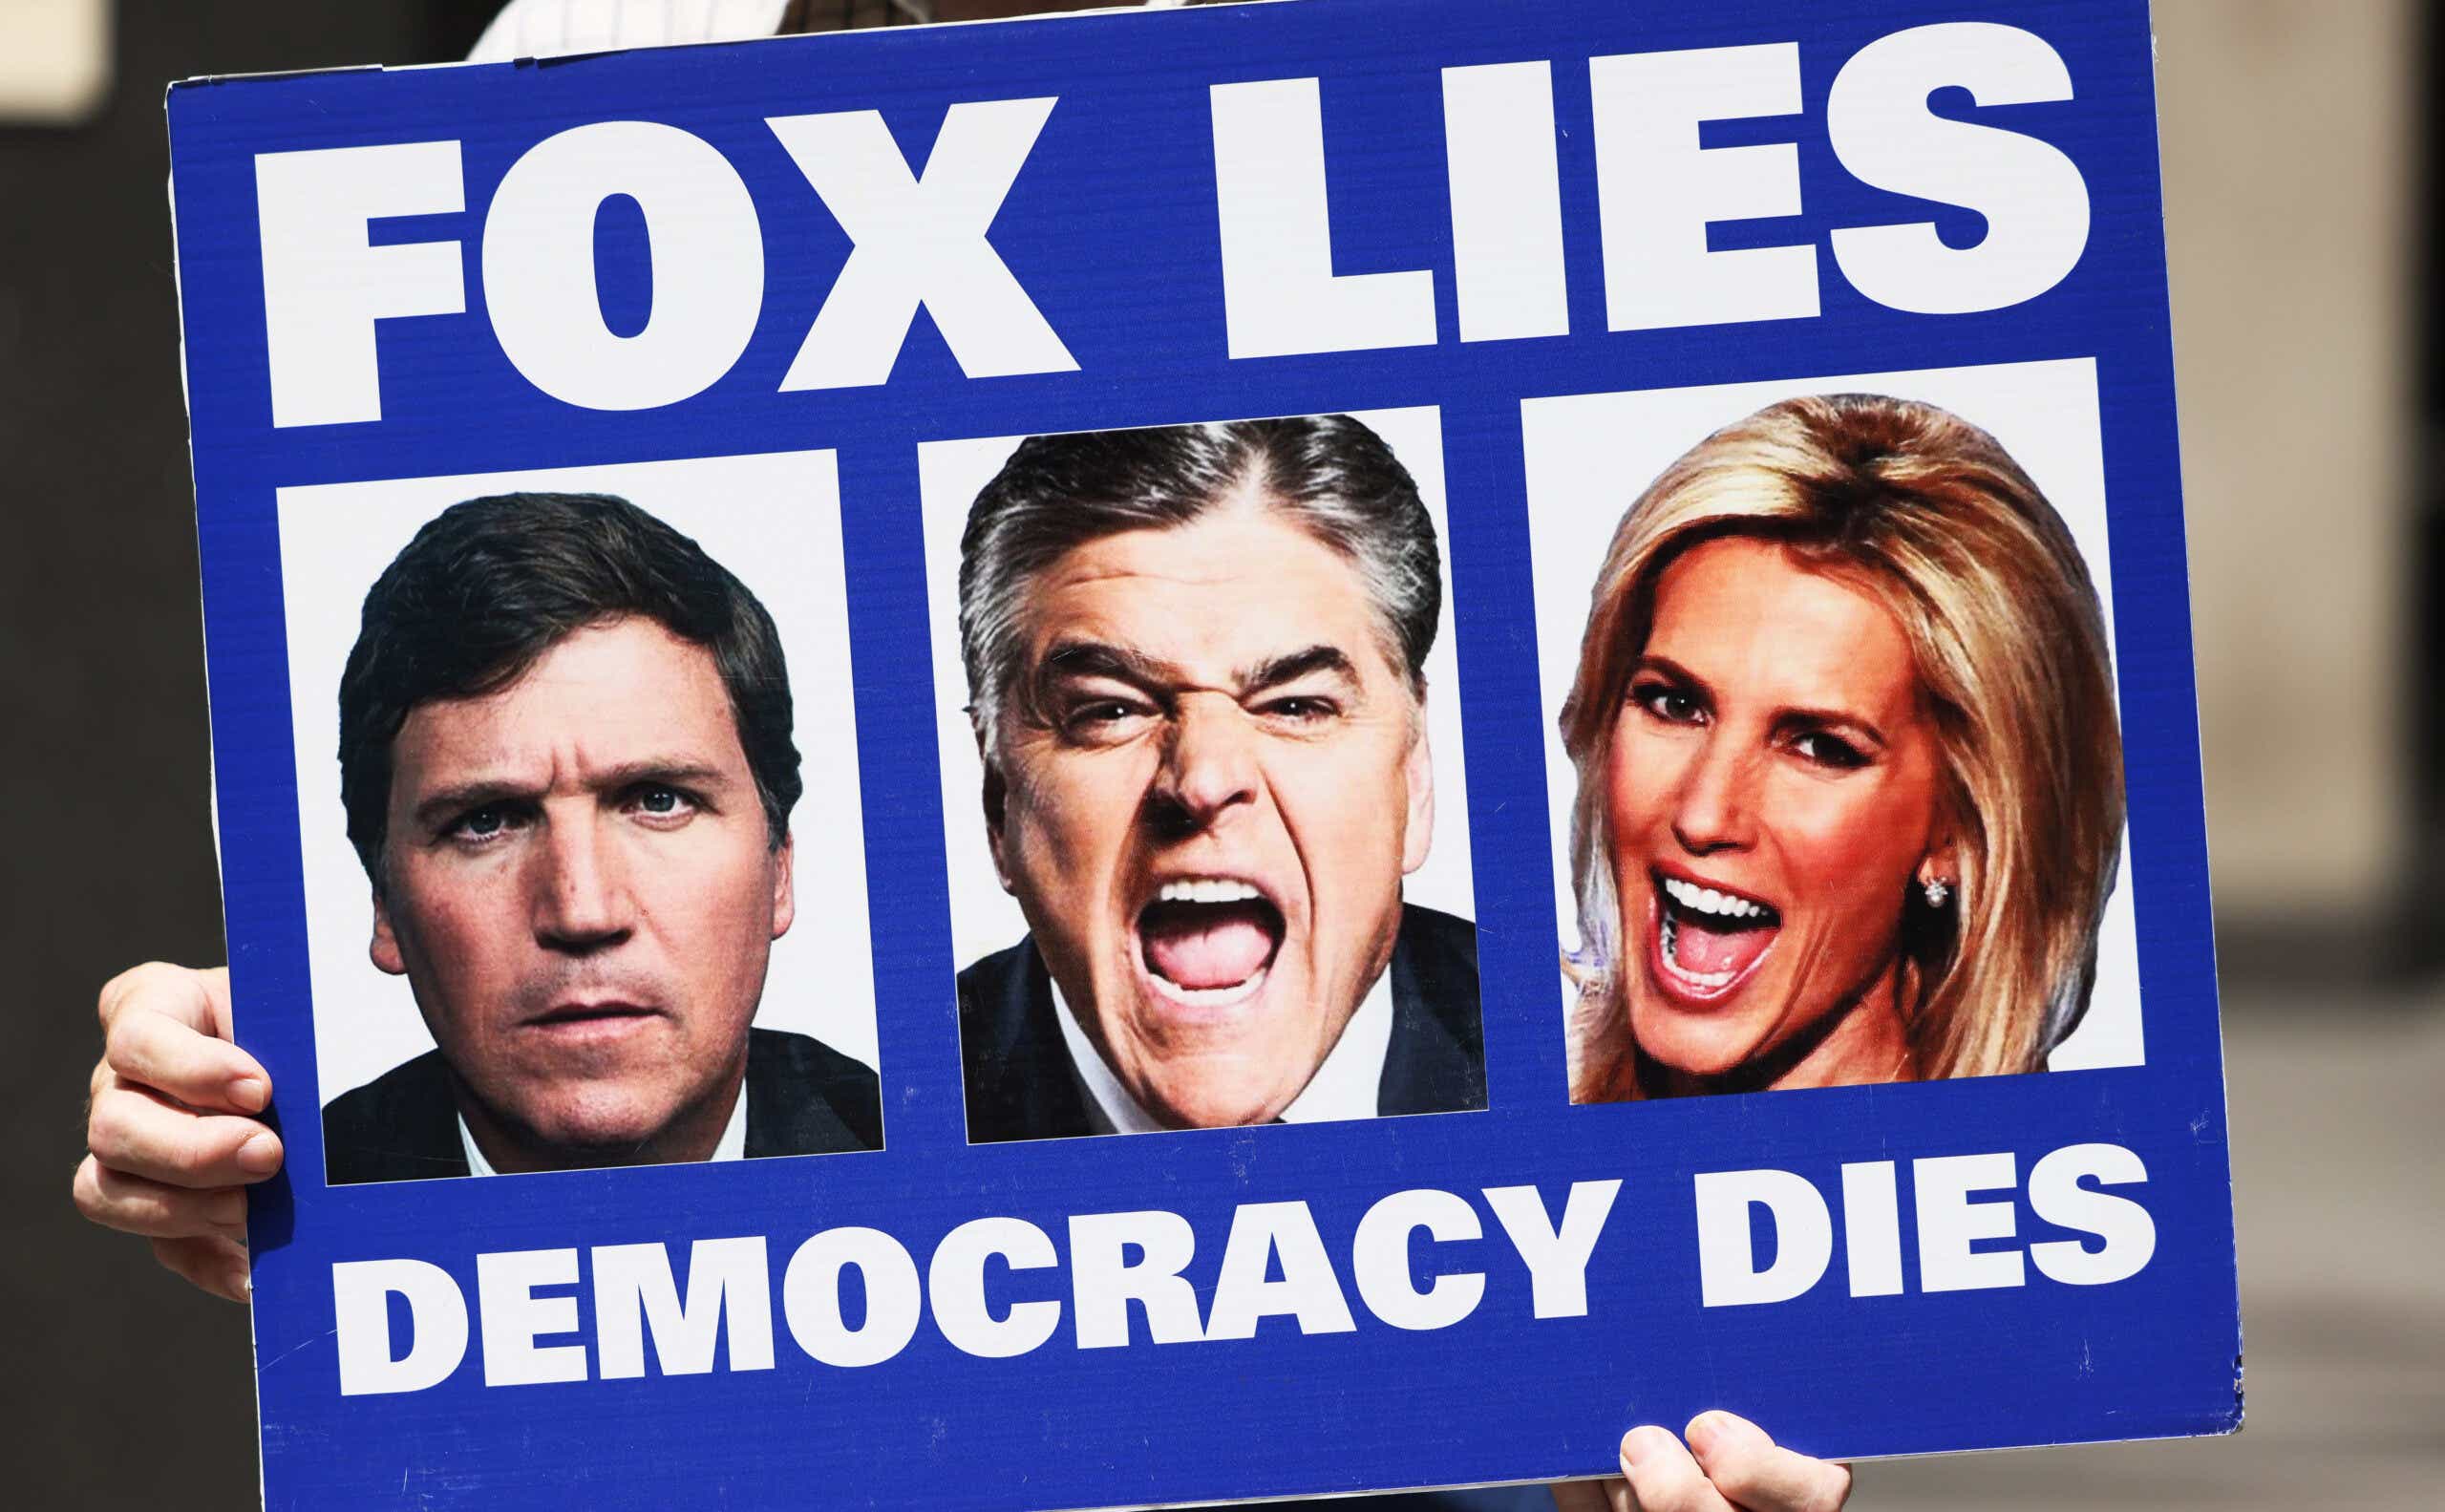 Protest sign reading "Fox lies democracy dies"